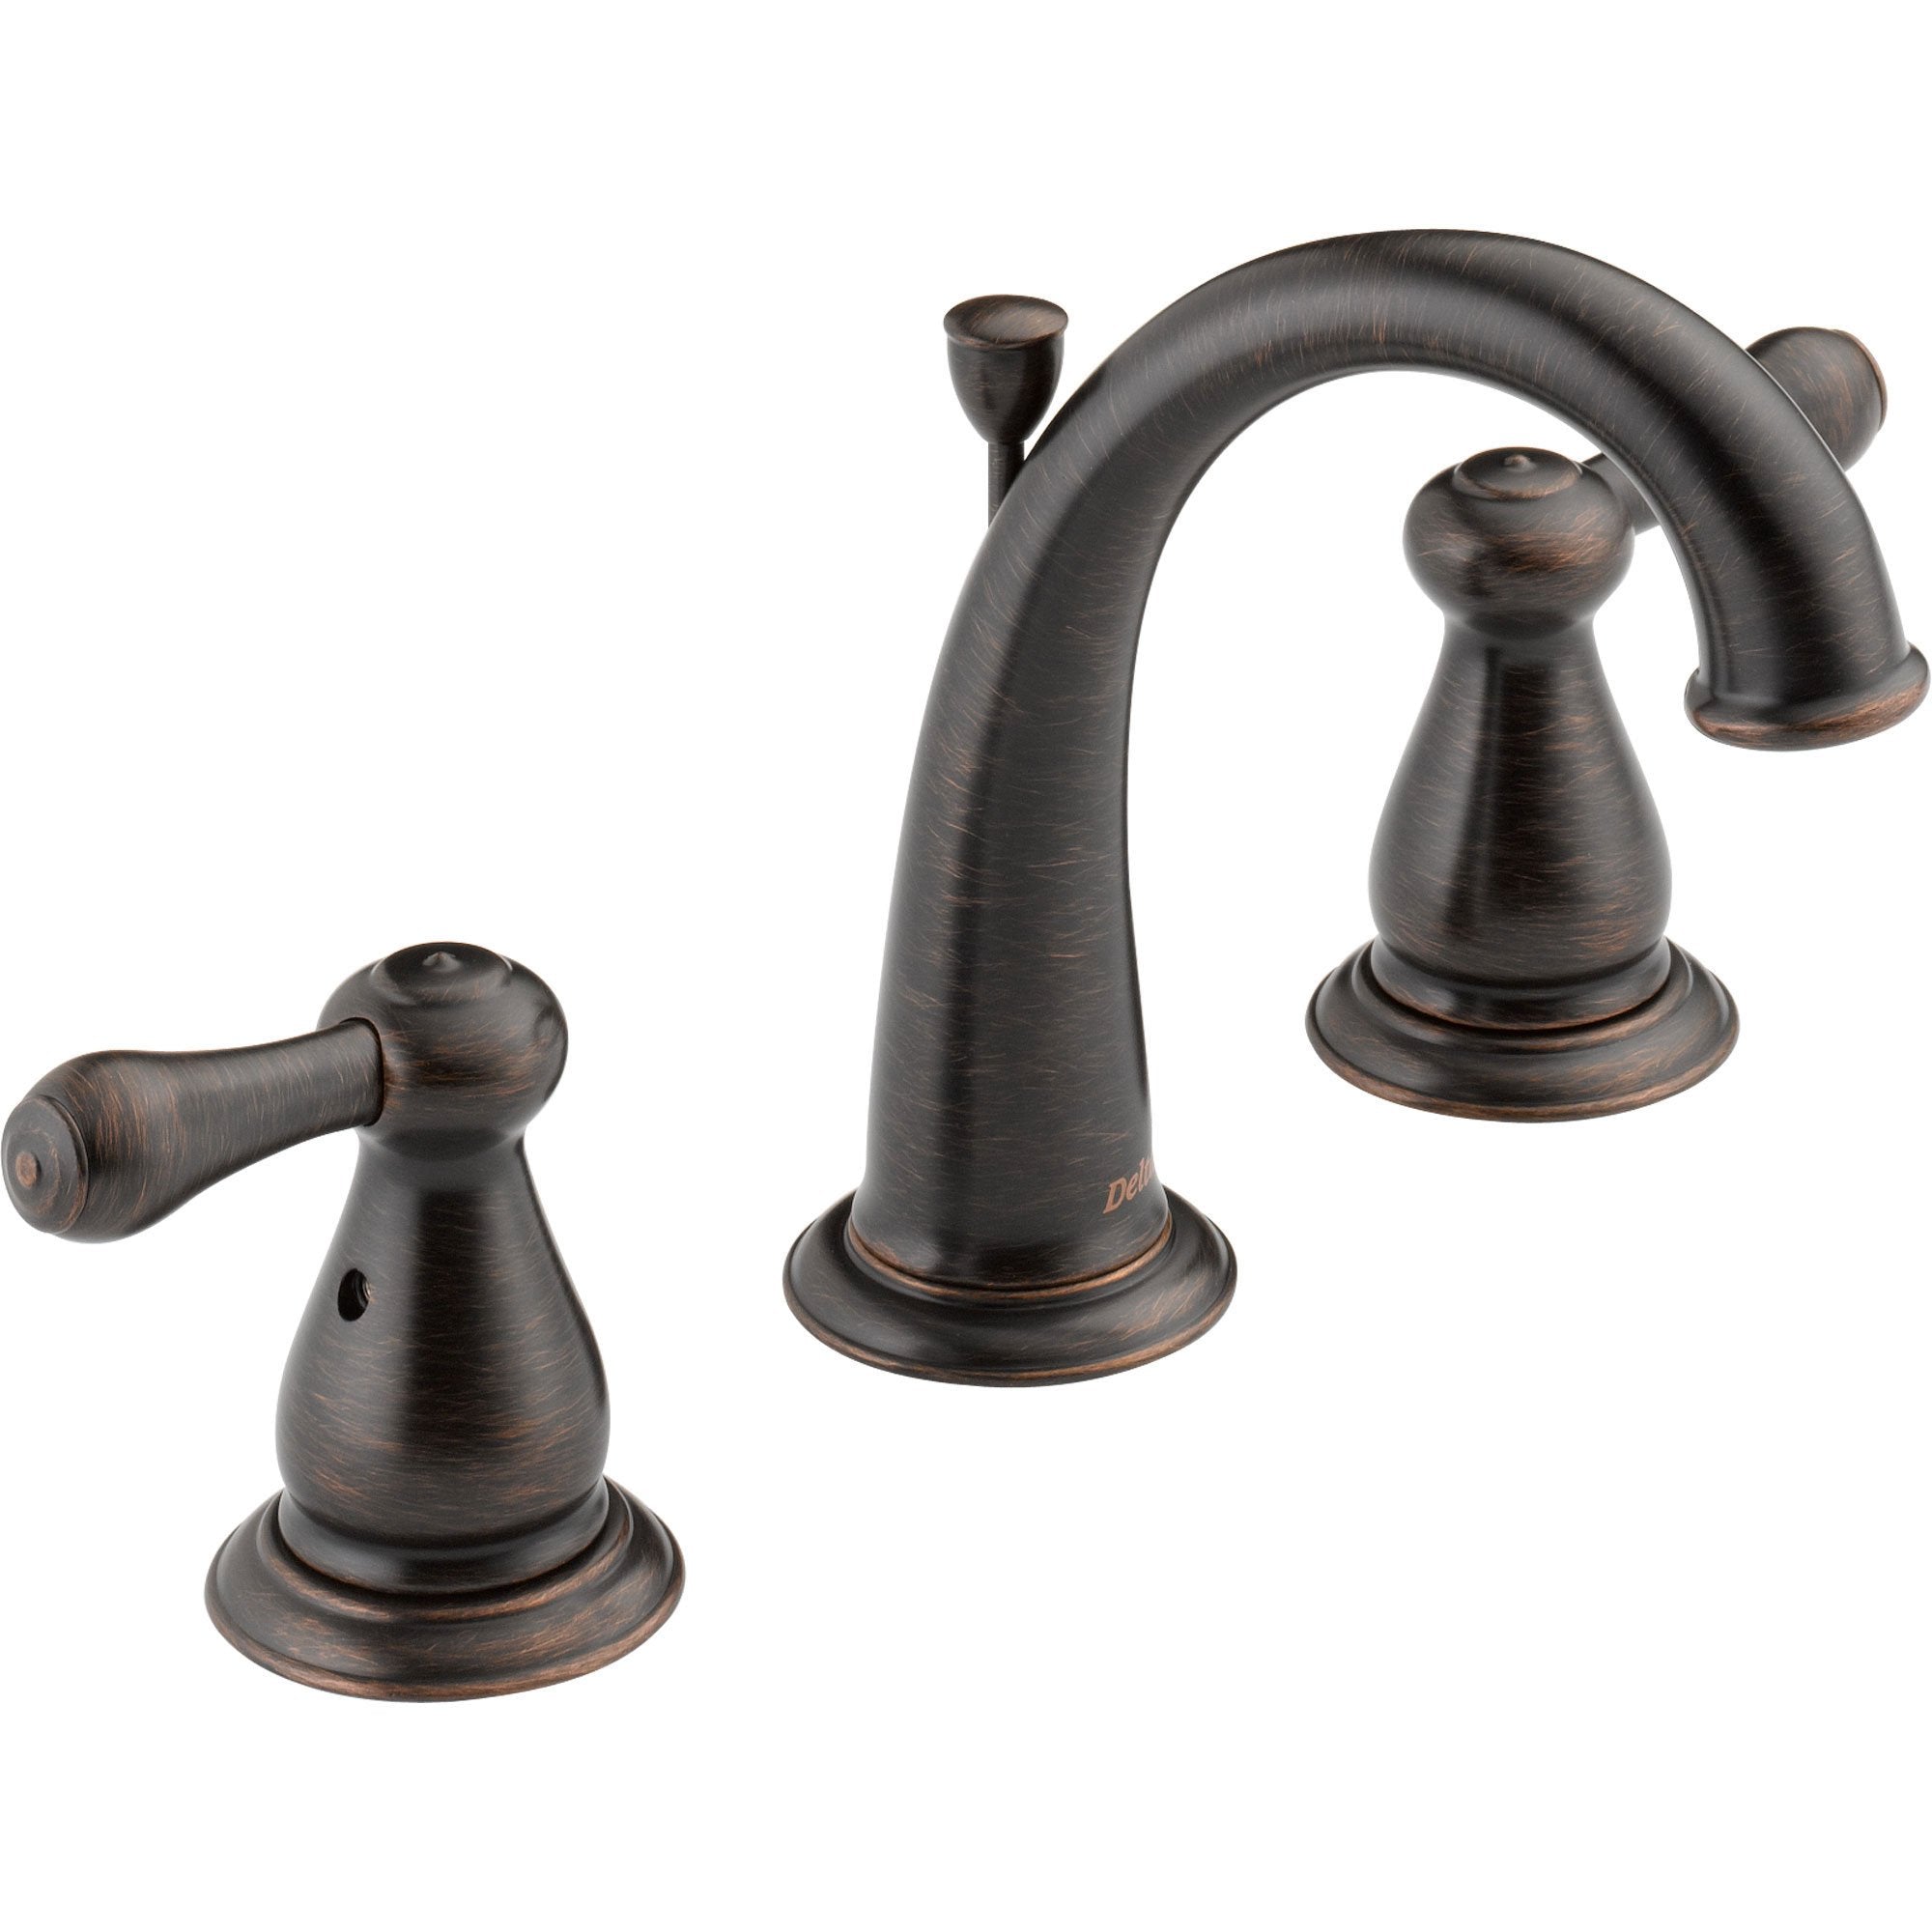 Delta Leland 8 in. Widespread High Arc Bathroom Faucet in Venetian Bronze 572934